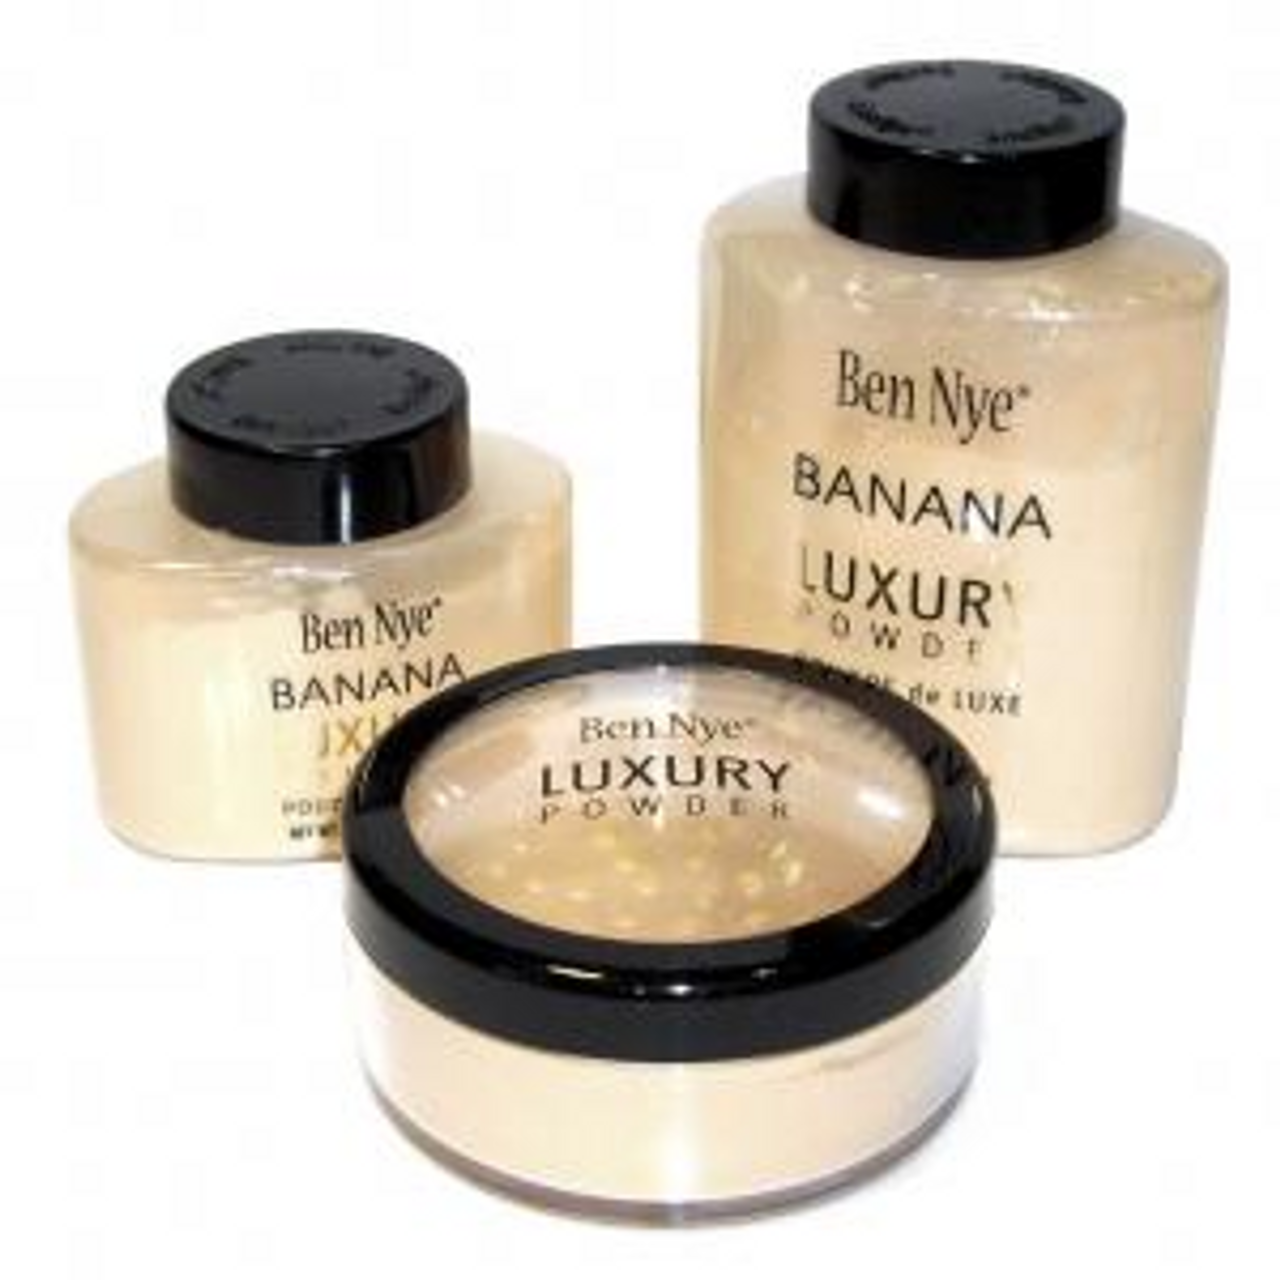 Banana Luxury Powder - 1.5 oz & 3oz Bottles - Ben Nye